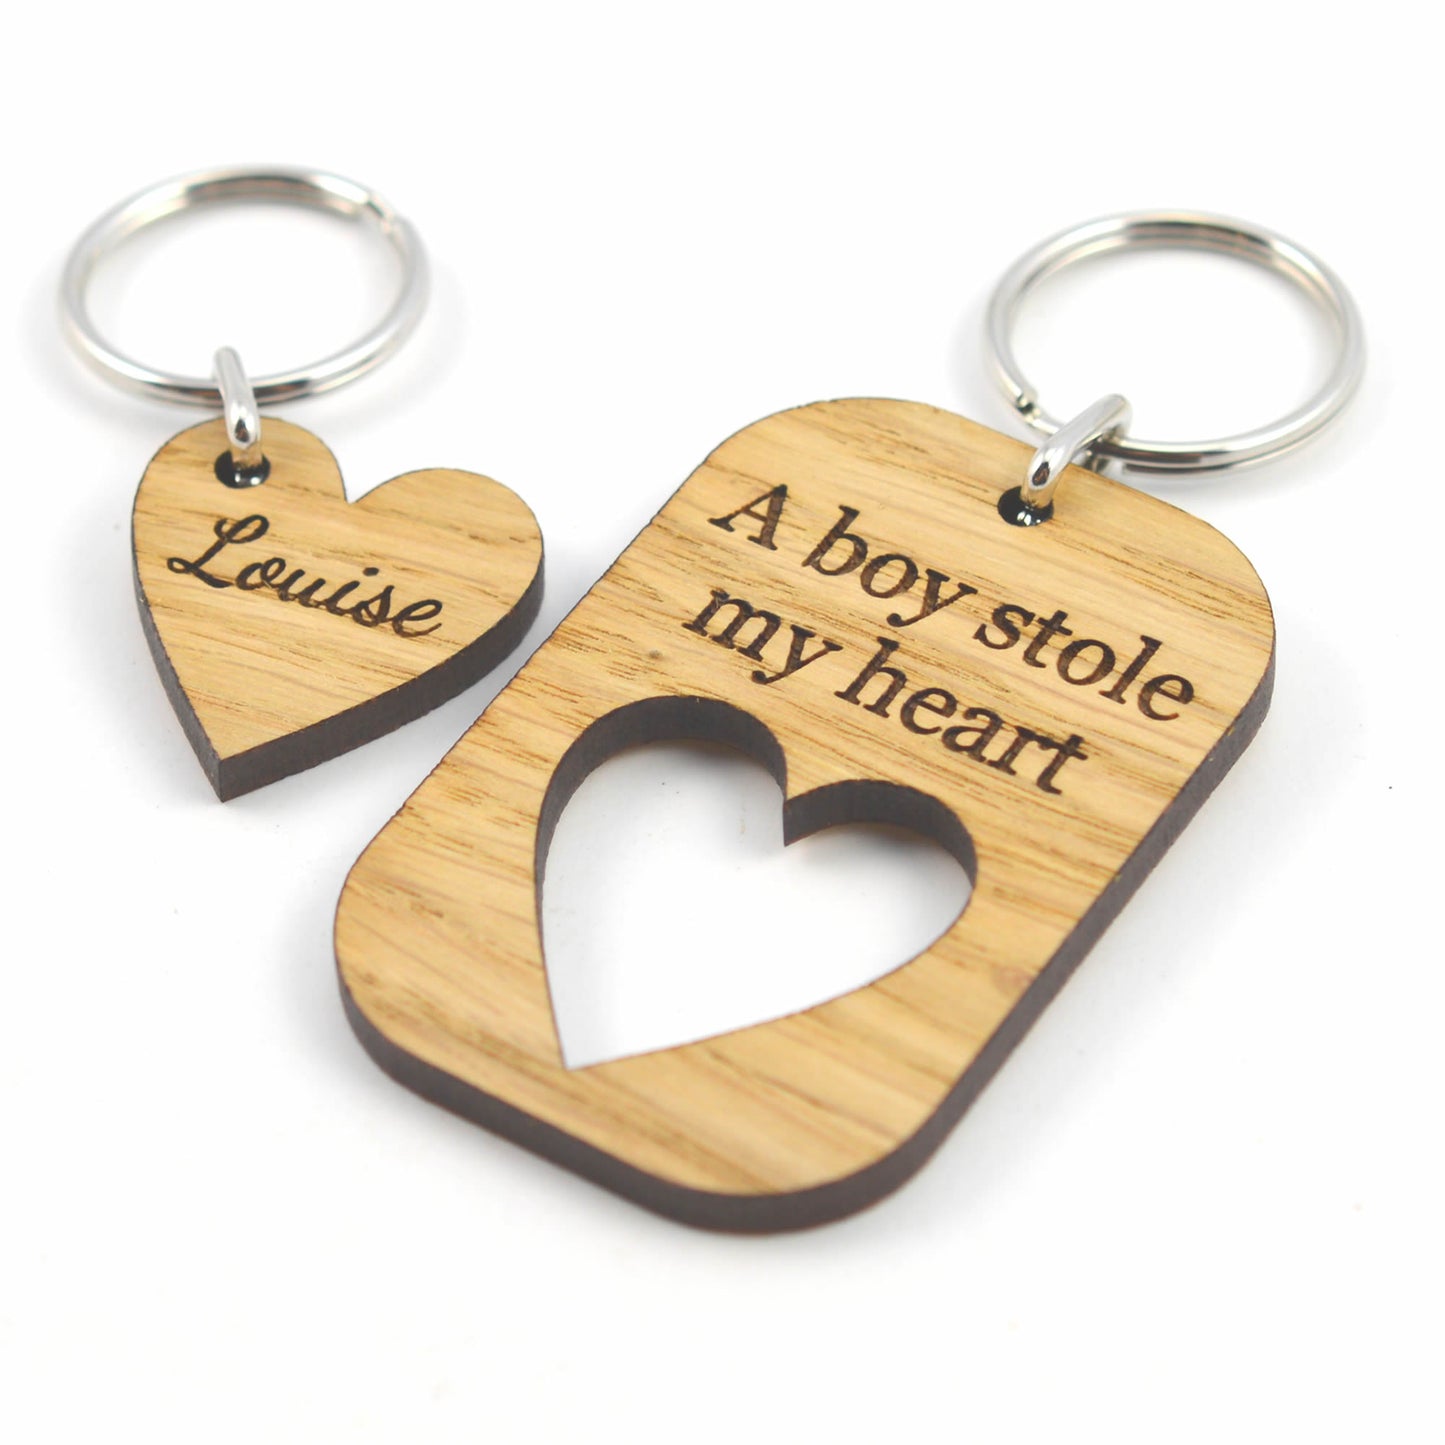 A BOY Stole My HEART - Valentines Day Keyring Set Gift For Boyfriend / Husband